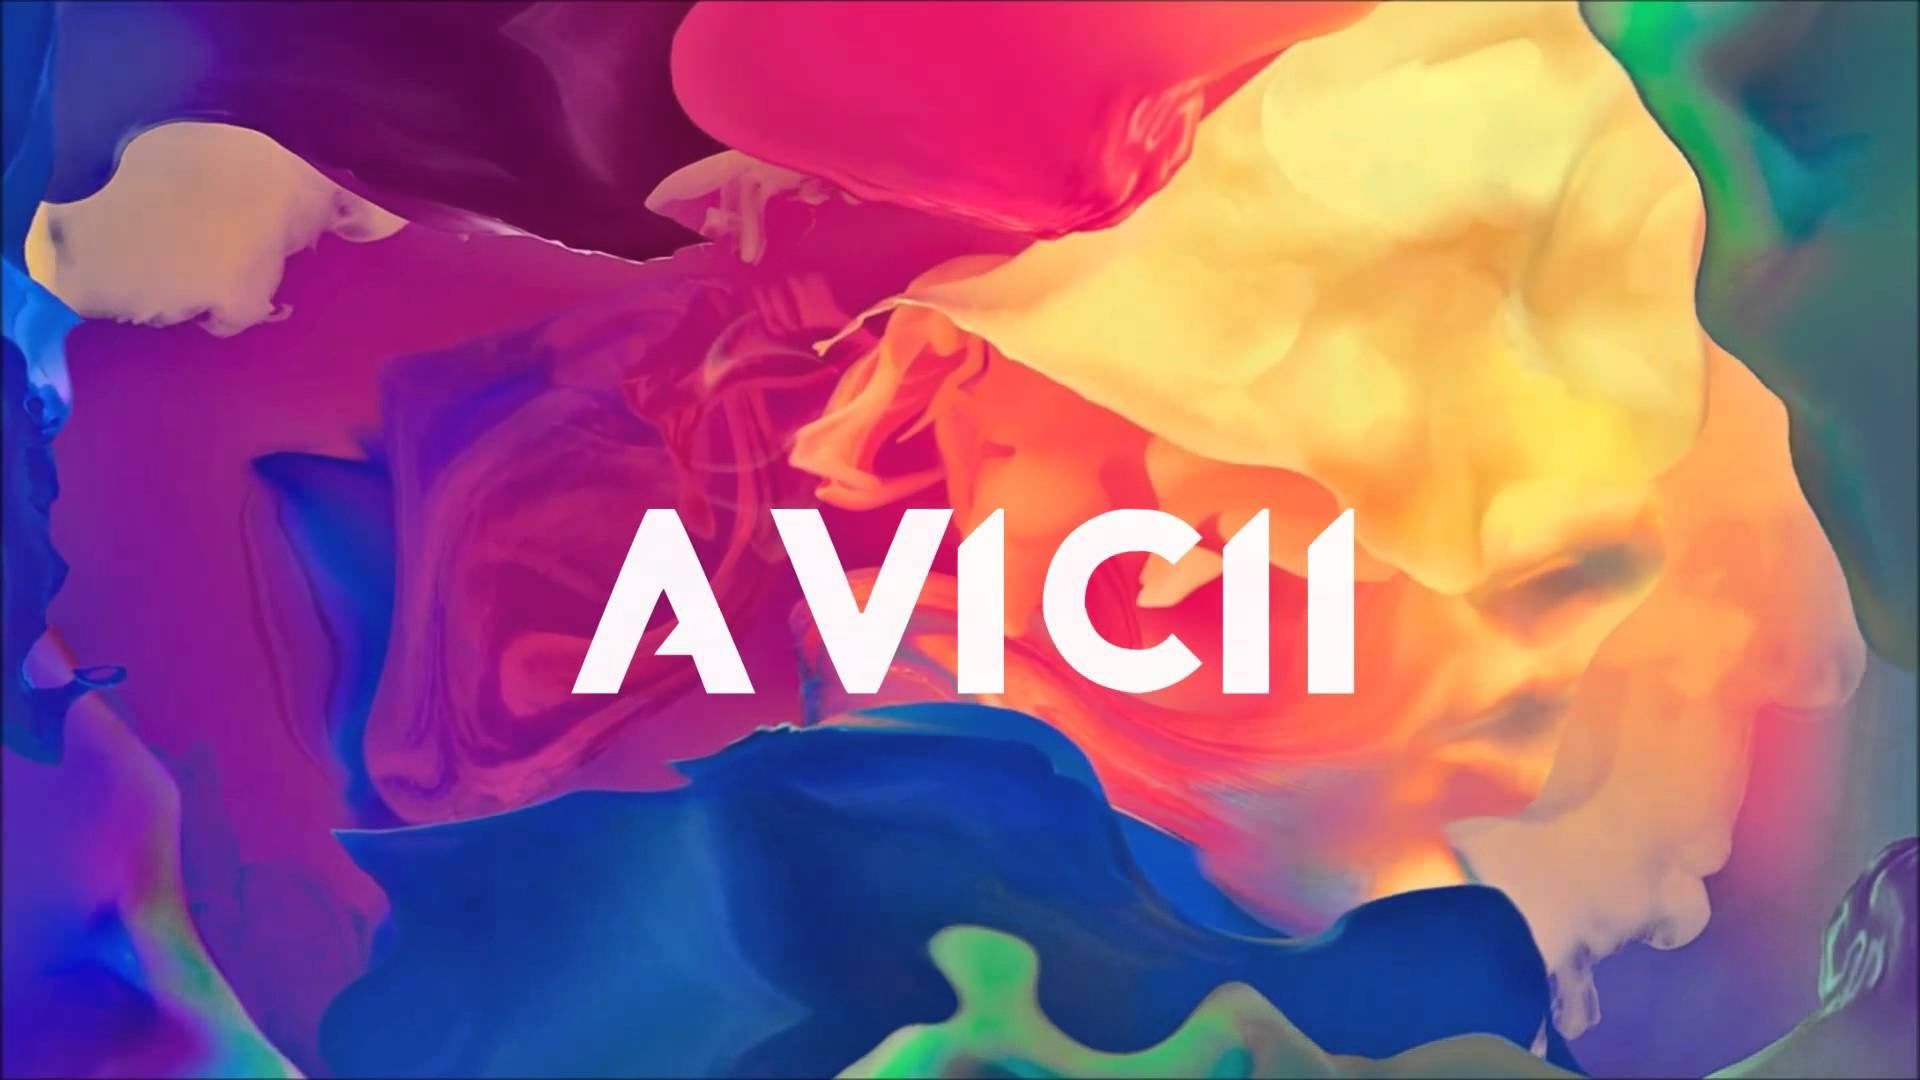 Avicii interview on Stories LP, October 26th, 2015